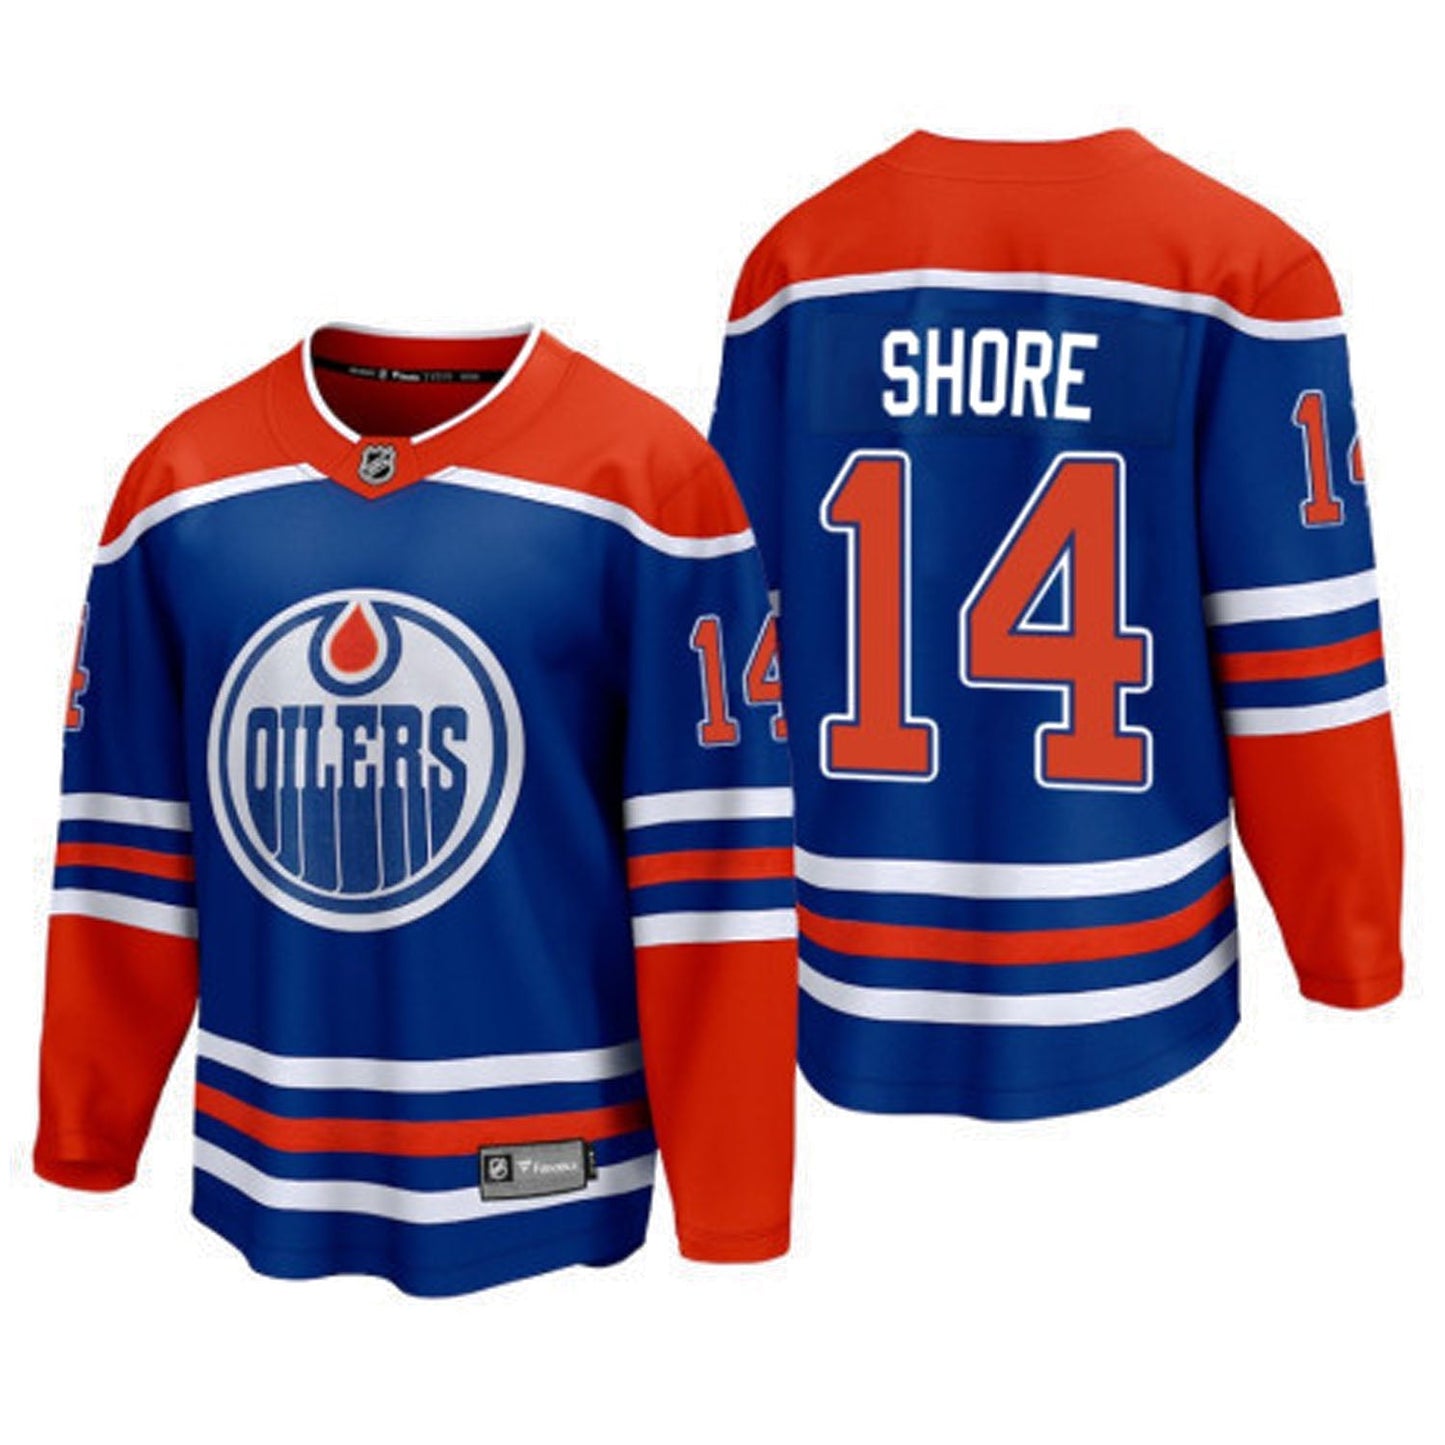 NHL Devin Shore Edmonton Oilers 14 Jersey